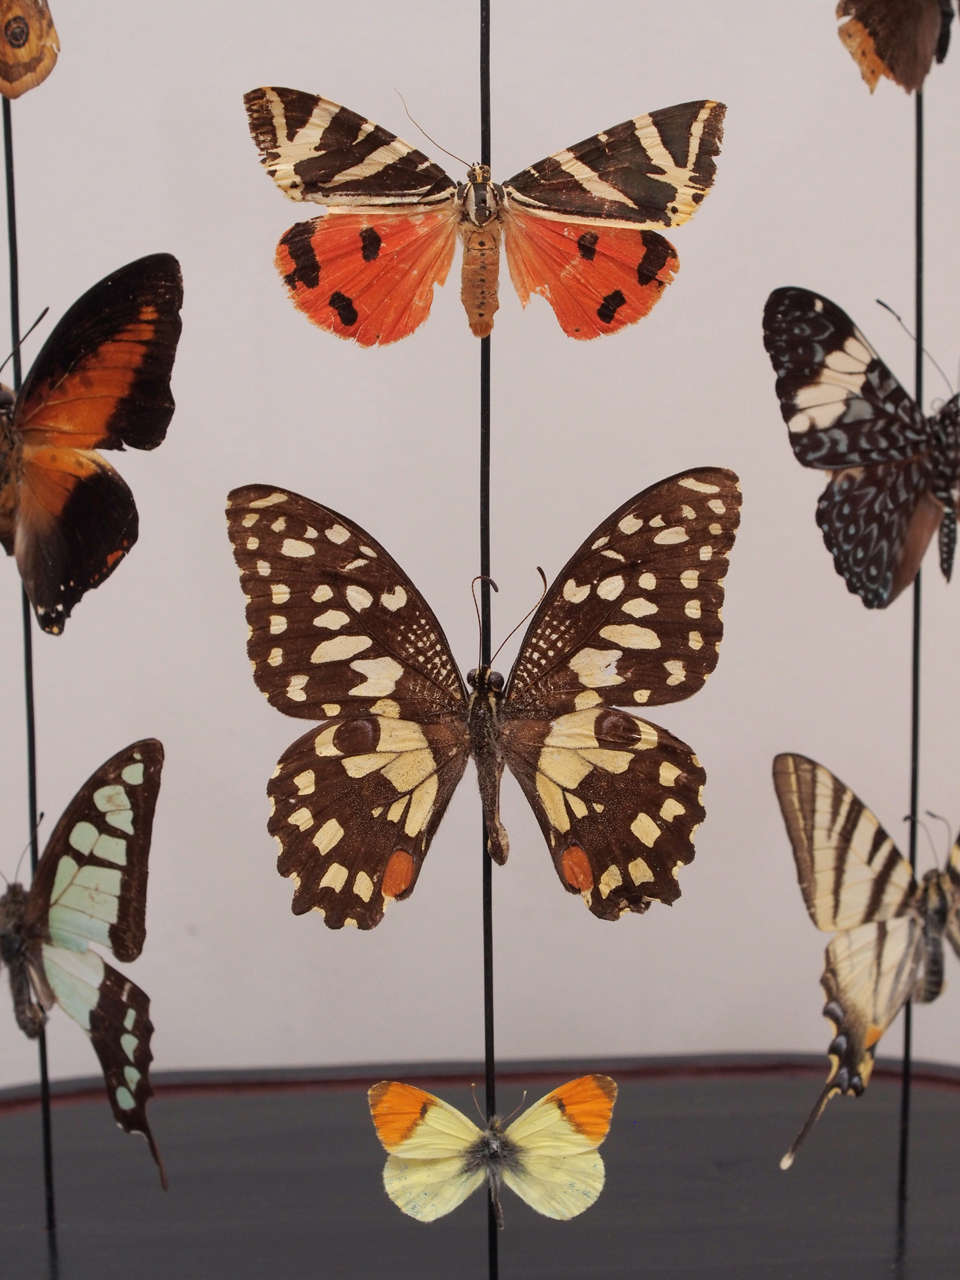 Wood Specimen Butterflies Under Glass Dome